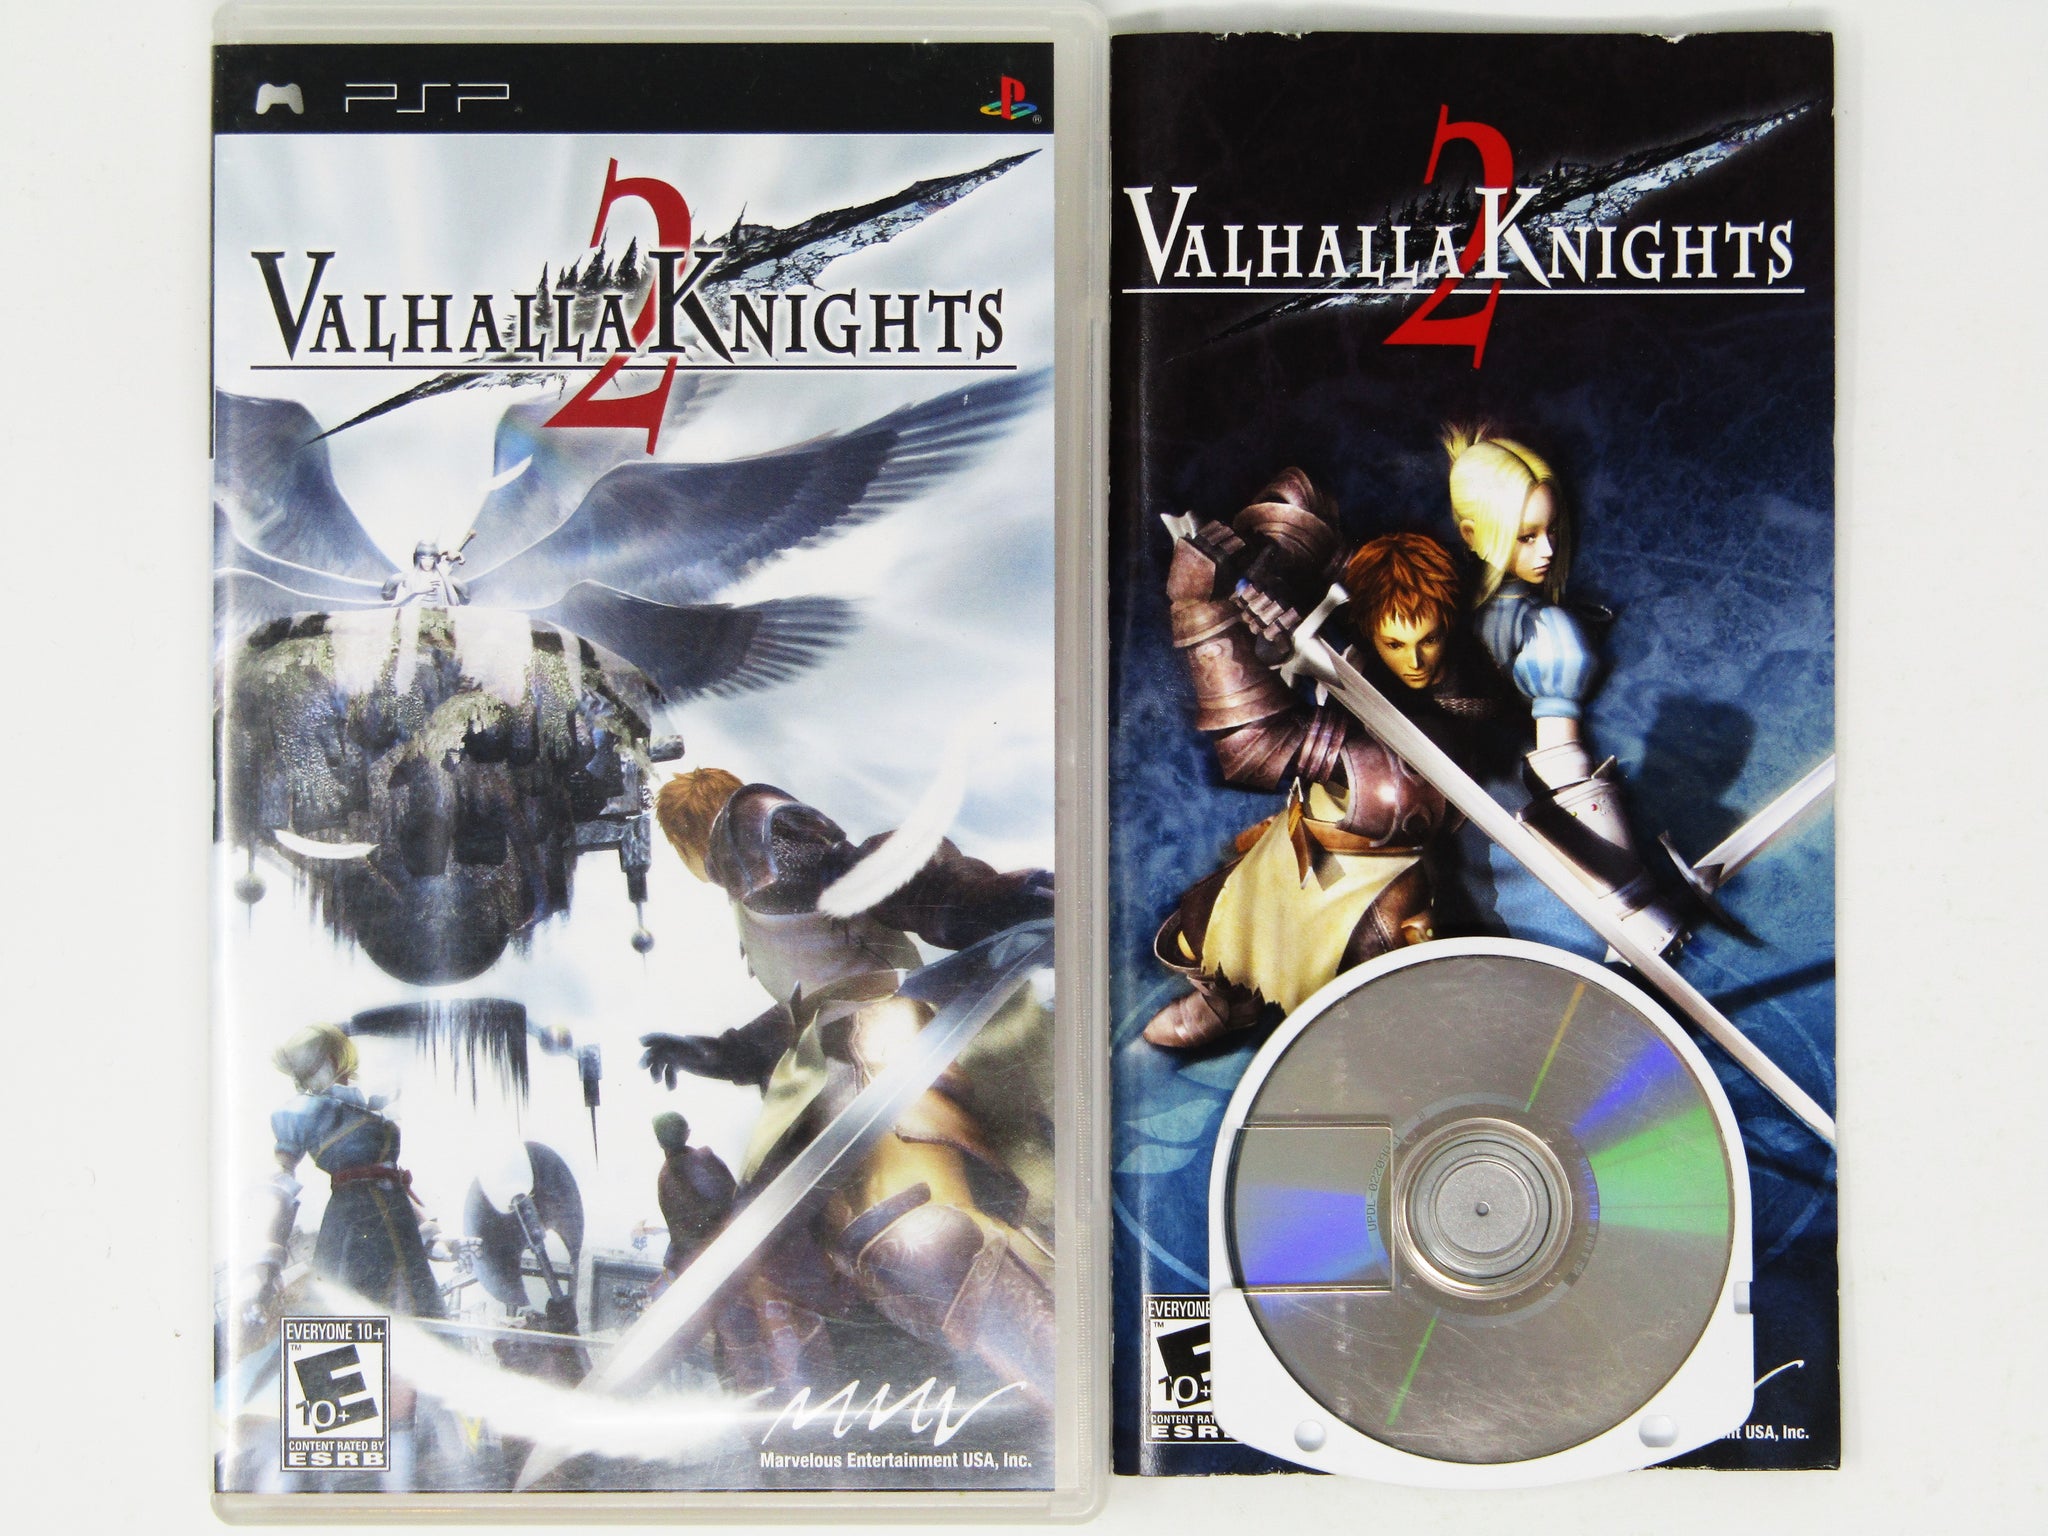 Valhalla Knights 2 rebalanced for North America - Siliconera